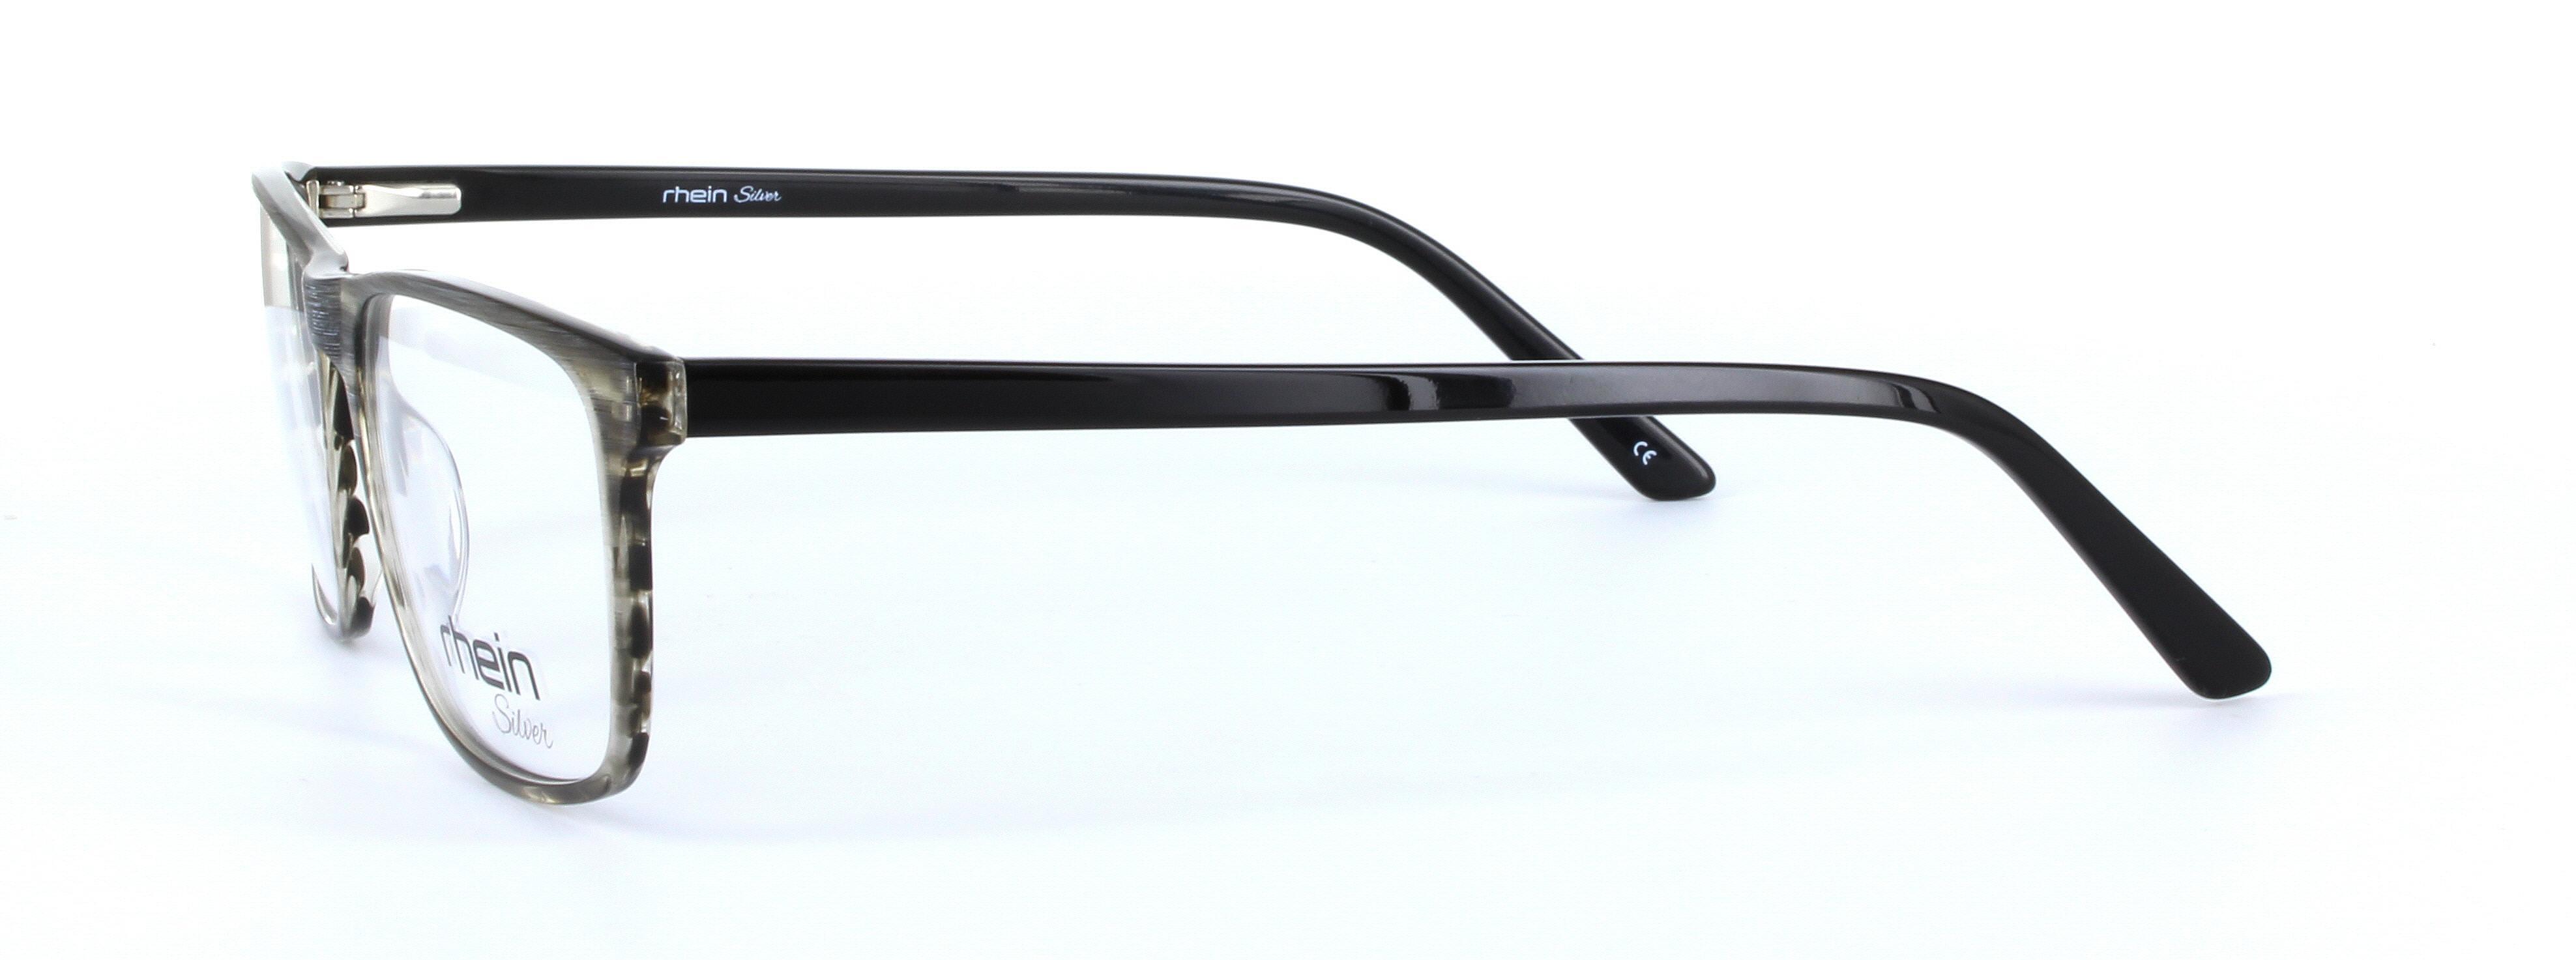 Kole Grey Full Rim Rectangular Plastic Glasses - Image View 2